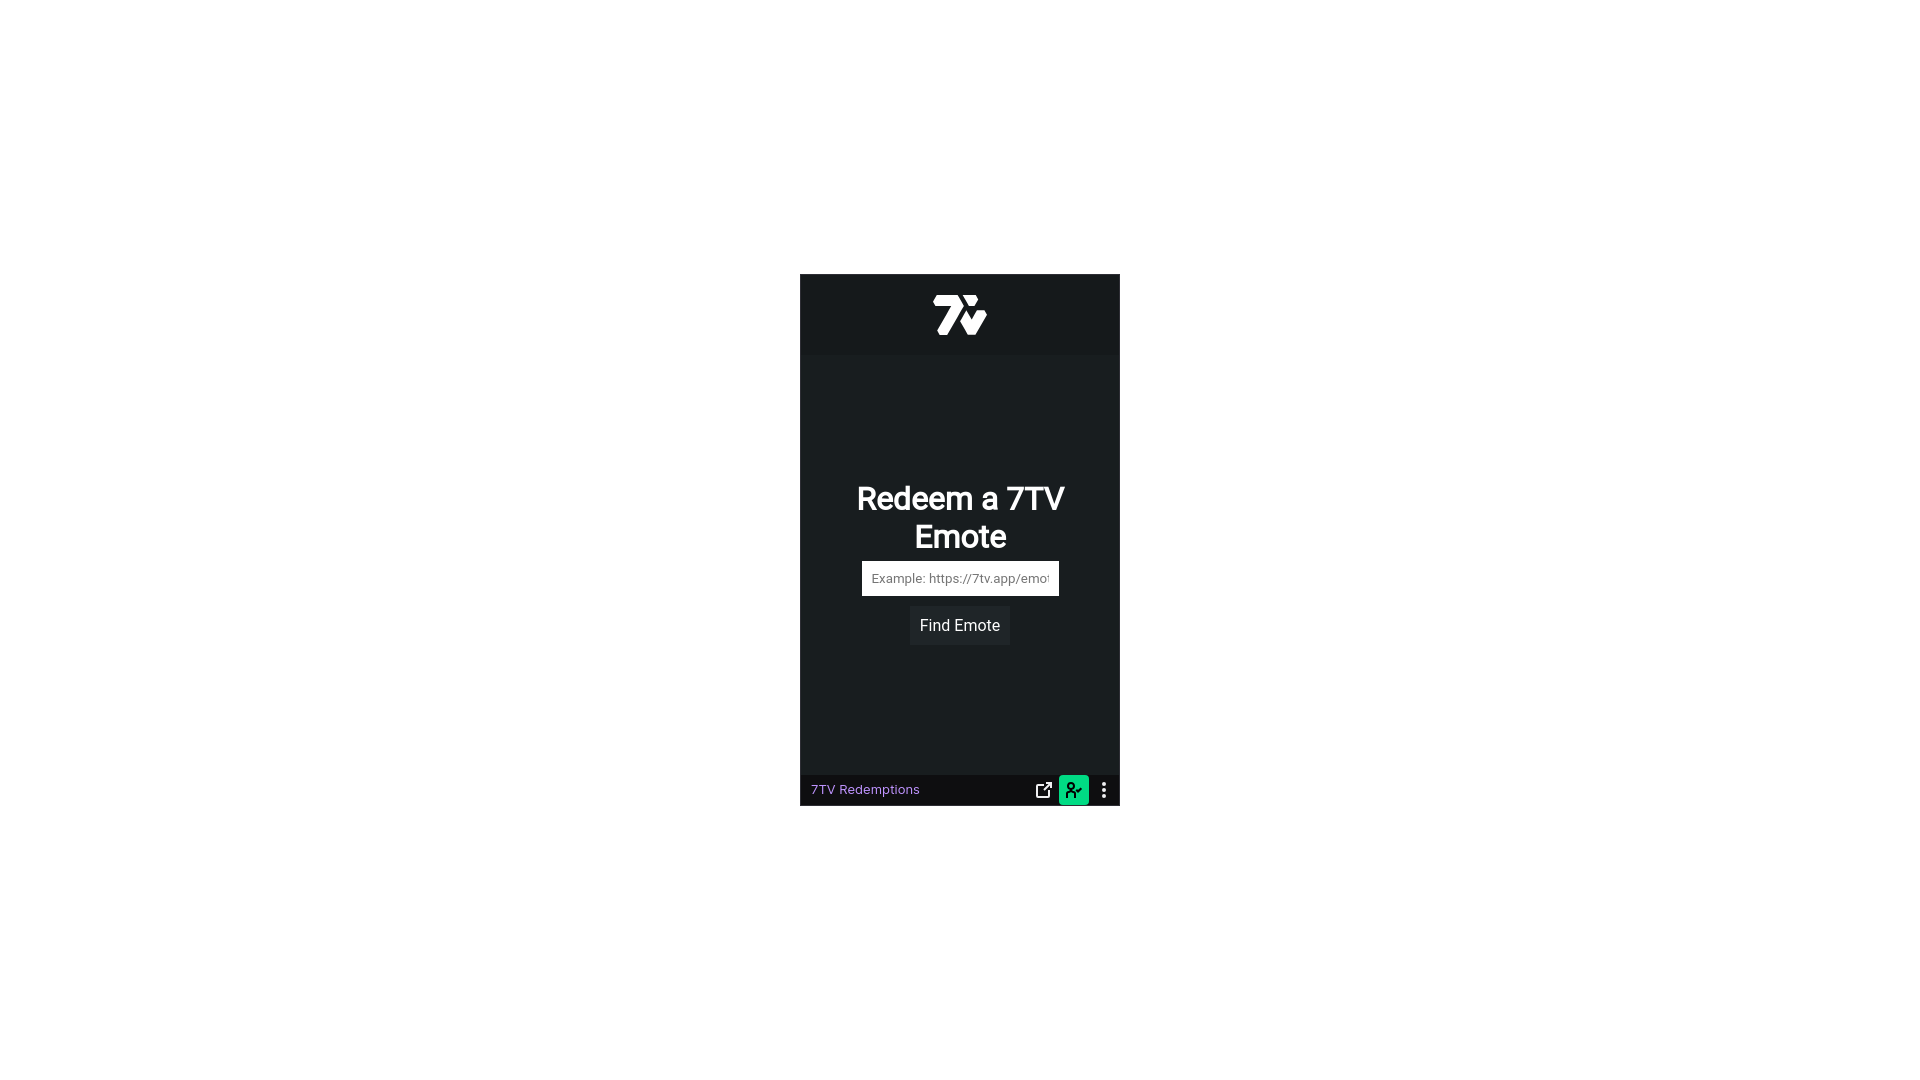 7TV Redemptions